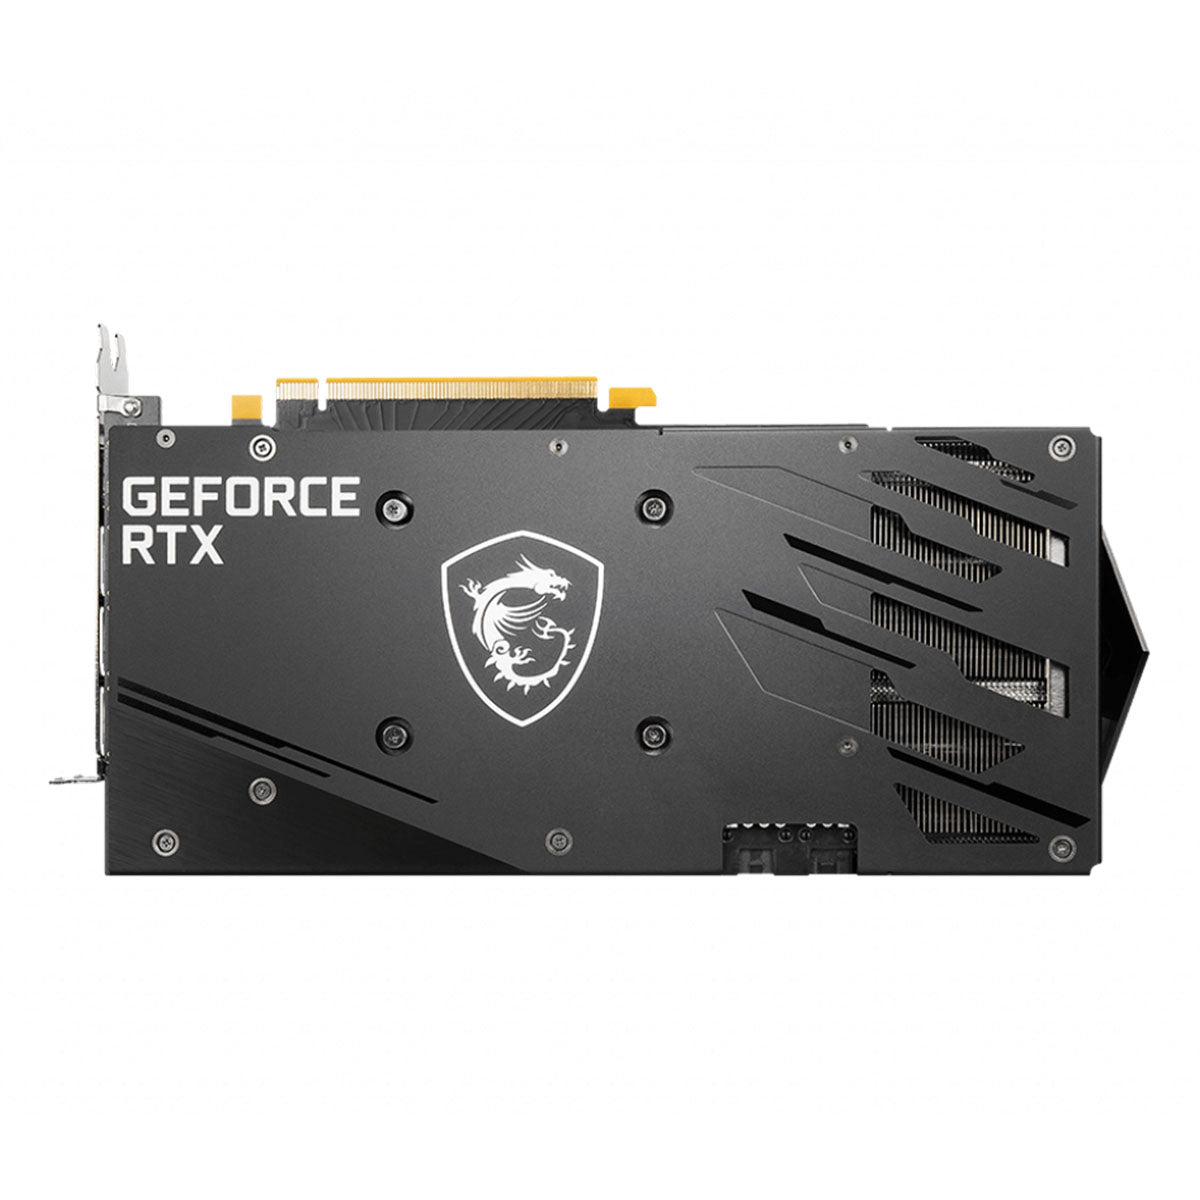 MSI GeForce RTX 3060 Ti GAMING X 8GB GDDR6 256-Bit LHR Graphics Card